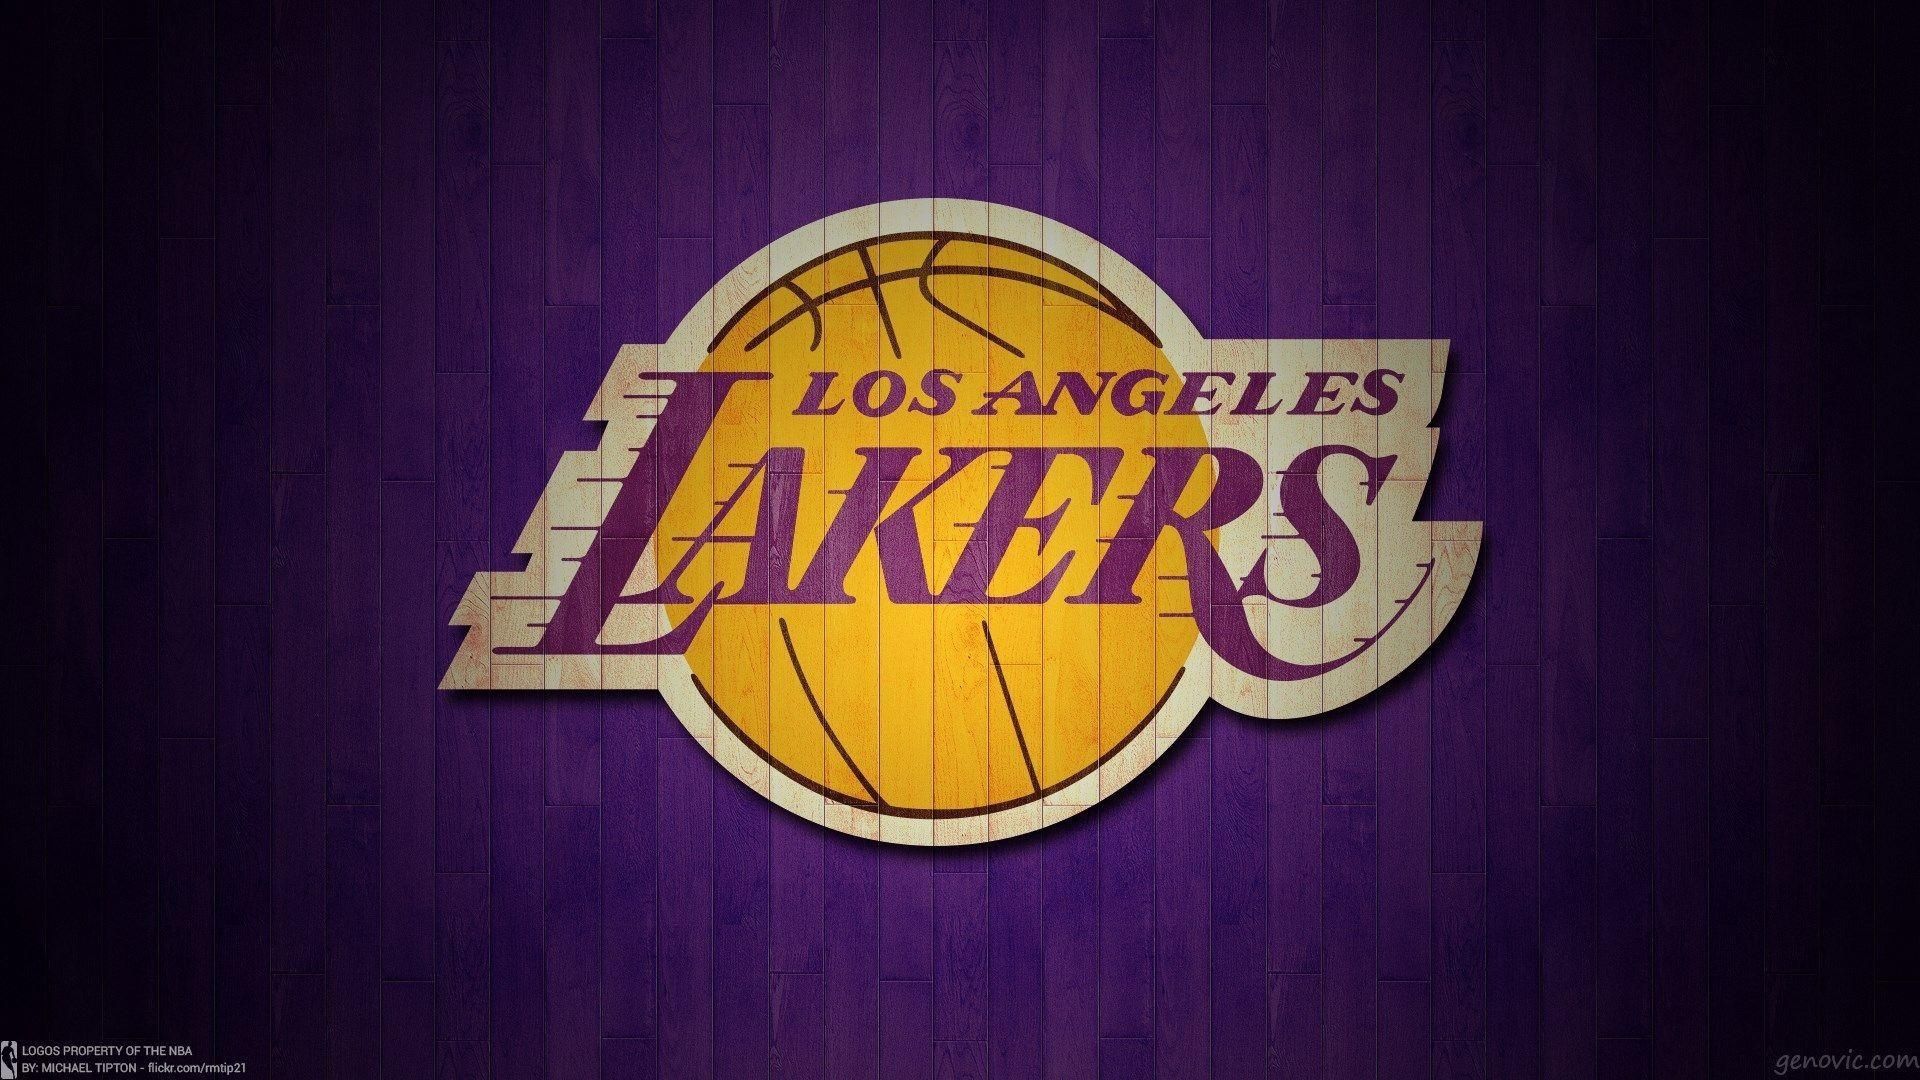 Latest Los Angeles Lakers Wallpaper HD FULL HD 1080p For PC Background. Lakers wallpaper, Los angeles lakers, Nba wallpaper